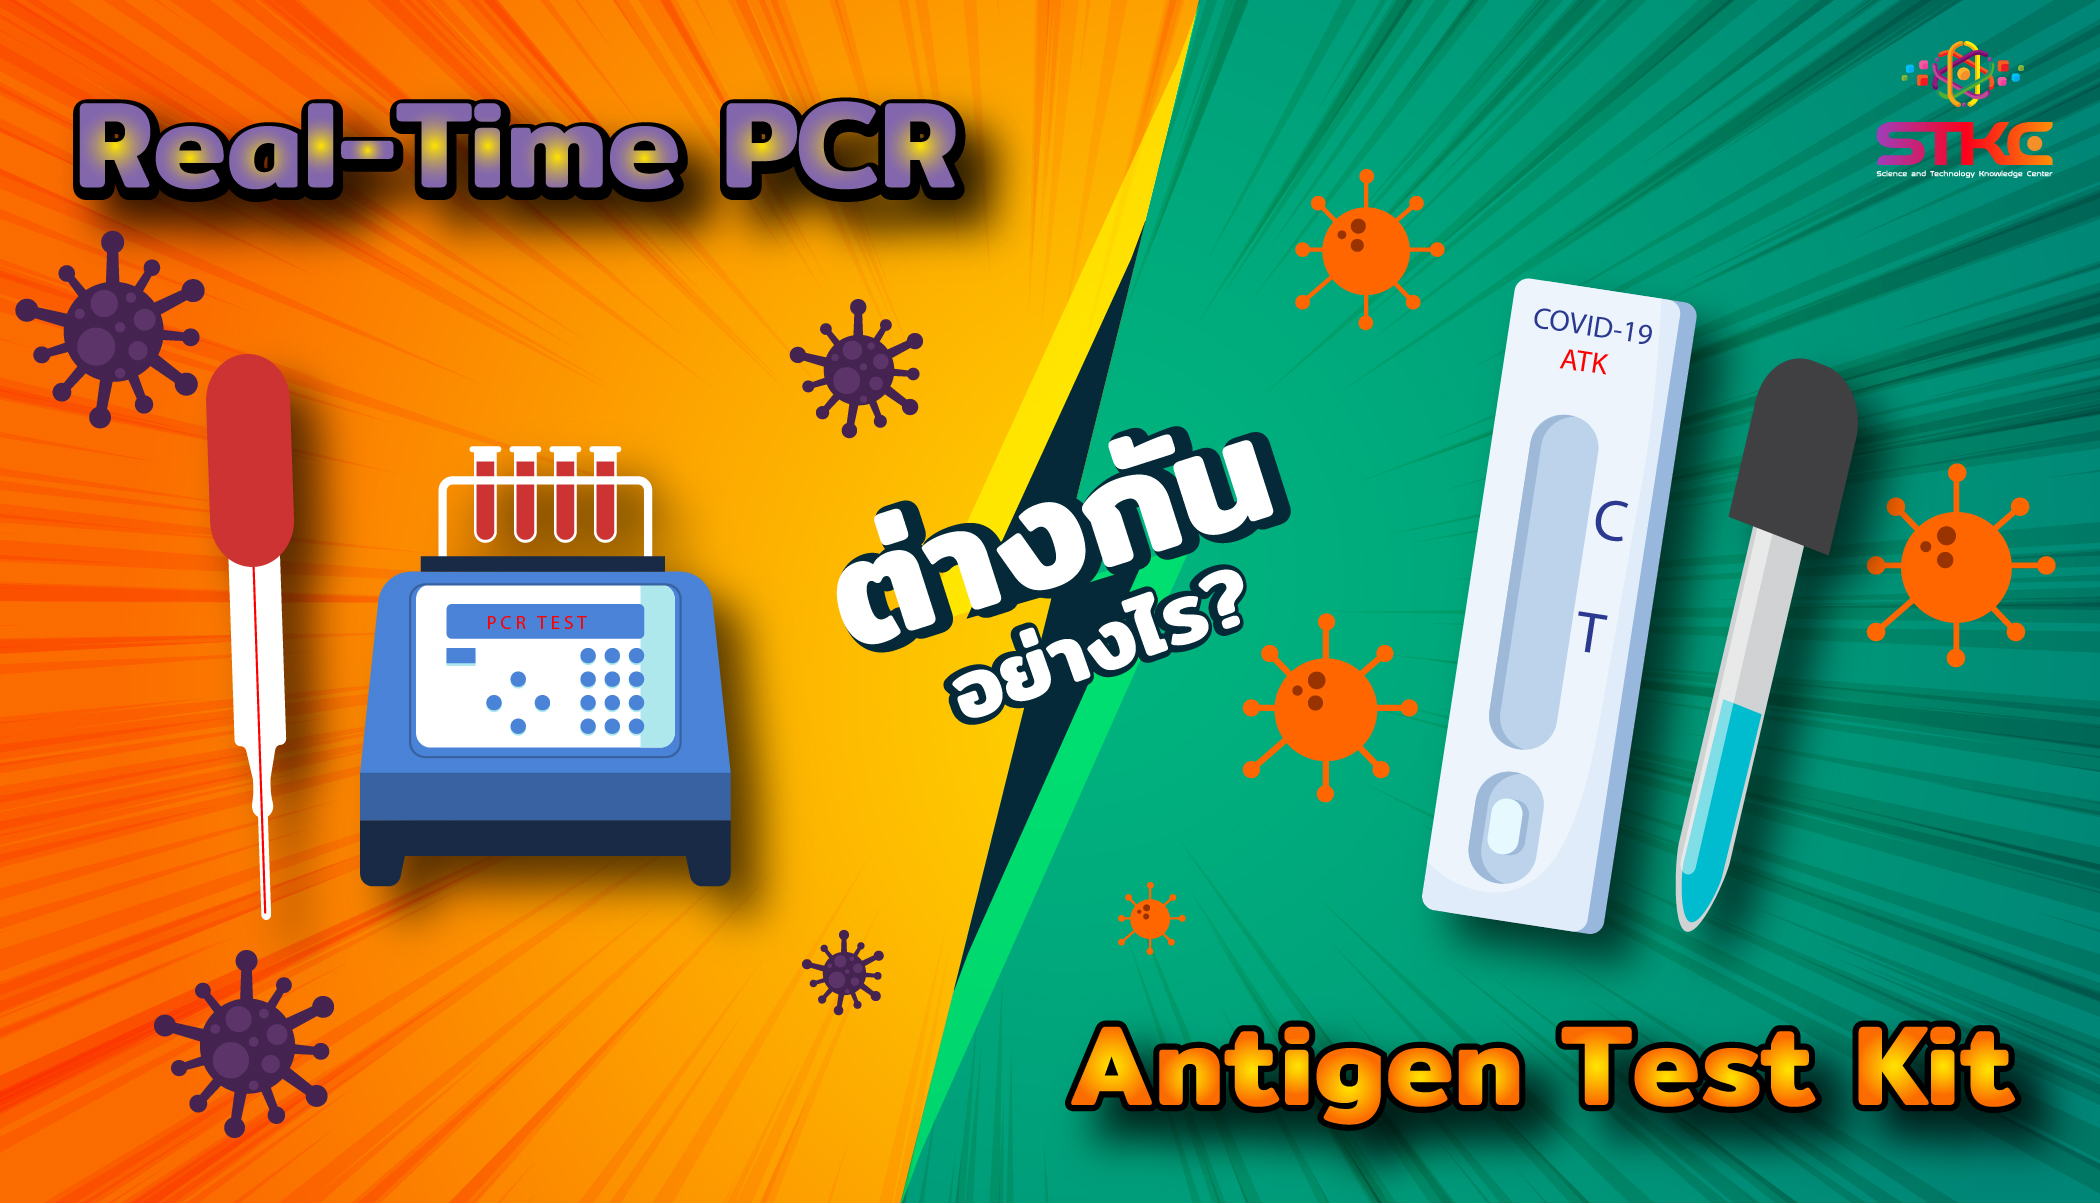 Real-Time PCR กับ Antigen Test Kit (ATK) ต่างกันอย่างไร?